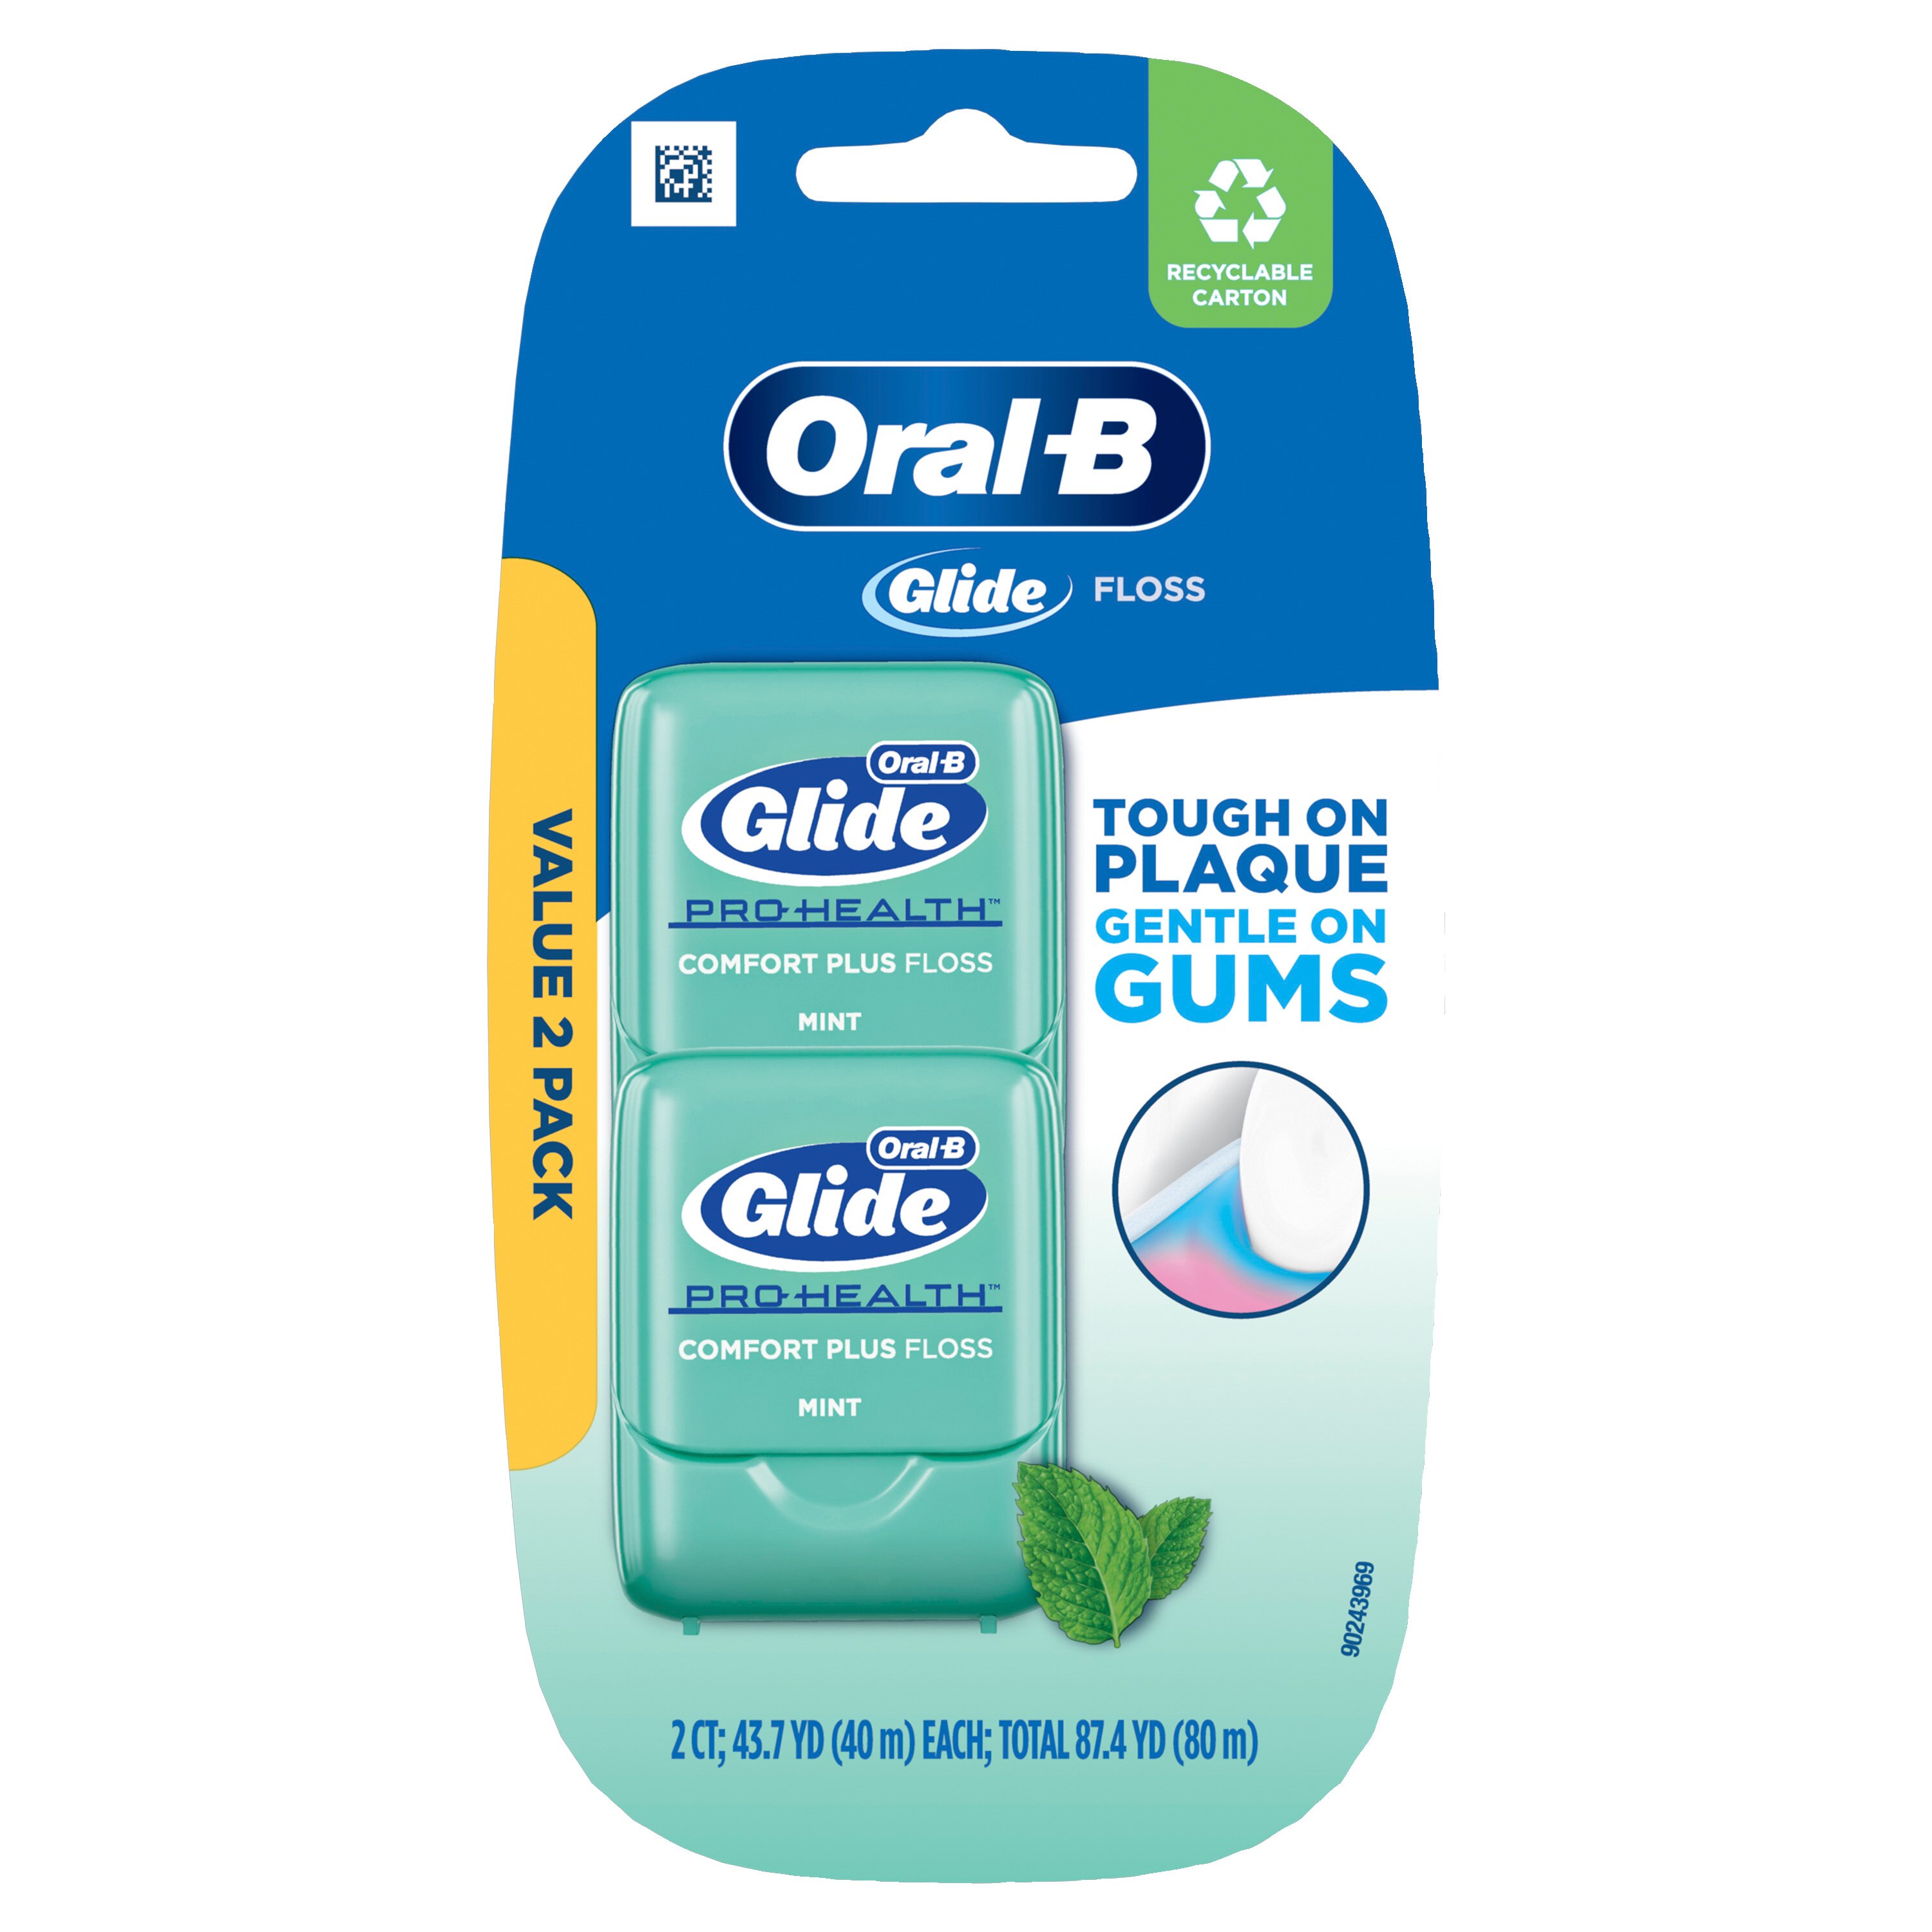 Oral-B Glide Pro-Health Comfort Plus Floss, Mint, 40 M, 3 Pack - 43.7 Yd , CVS